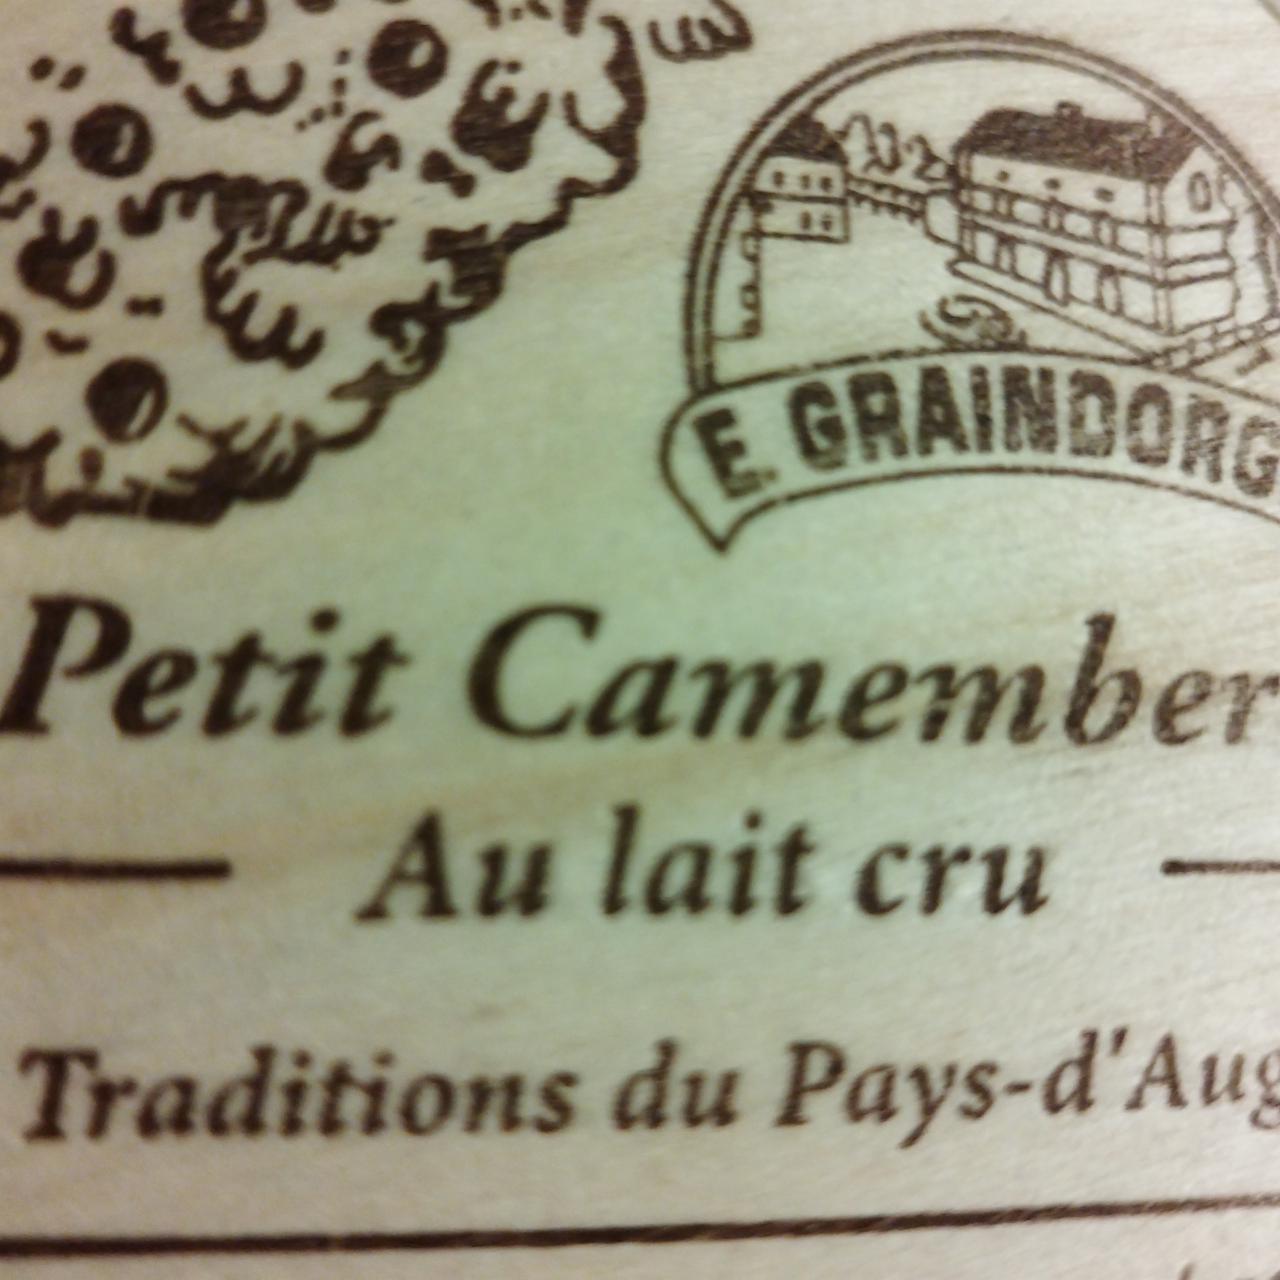 Fotografie - Petit Camembert Au lait cru E.Graindorge